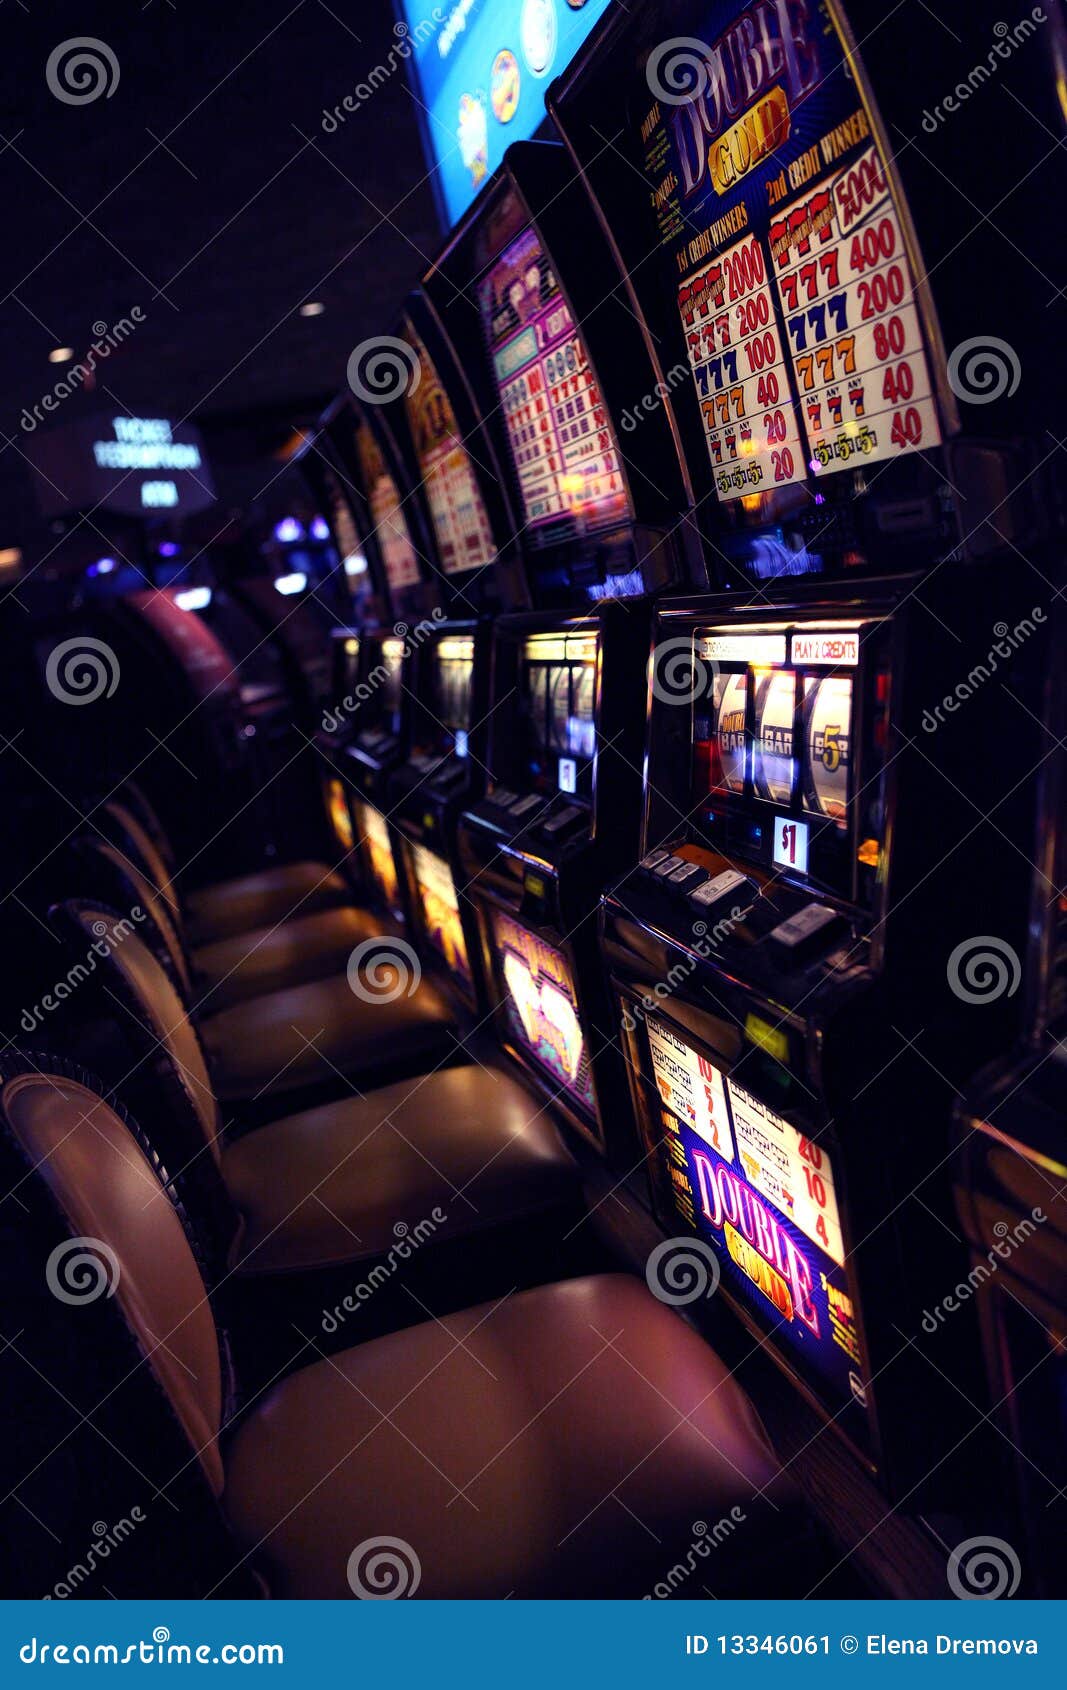 super casino online casino